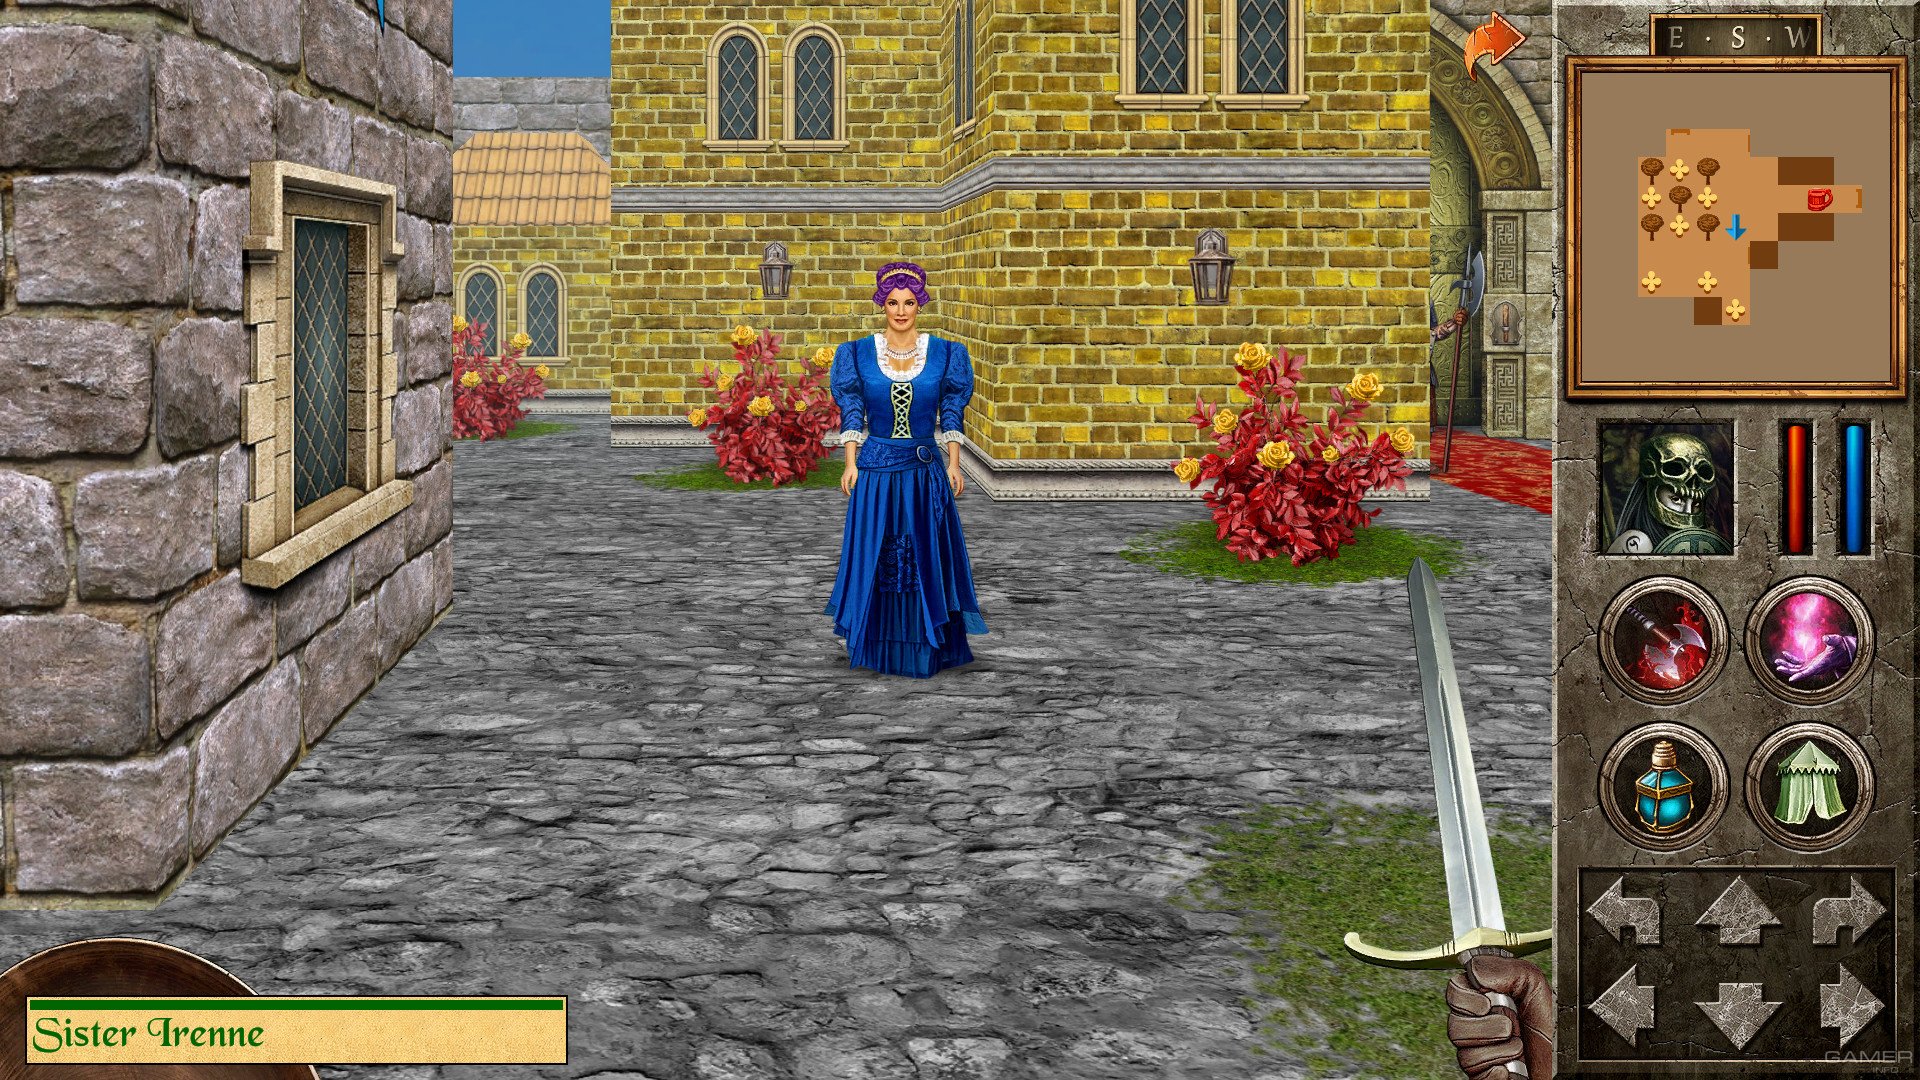 Игры страница 7. Игра Quest. The Quest игра Redshift. Quest игра 2000. Игра Рыцарский квест.